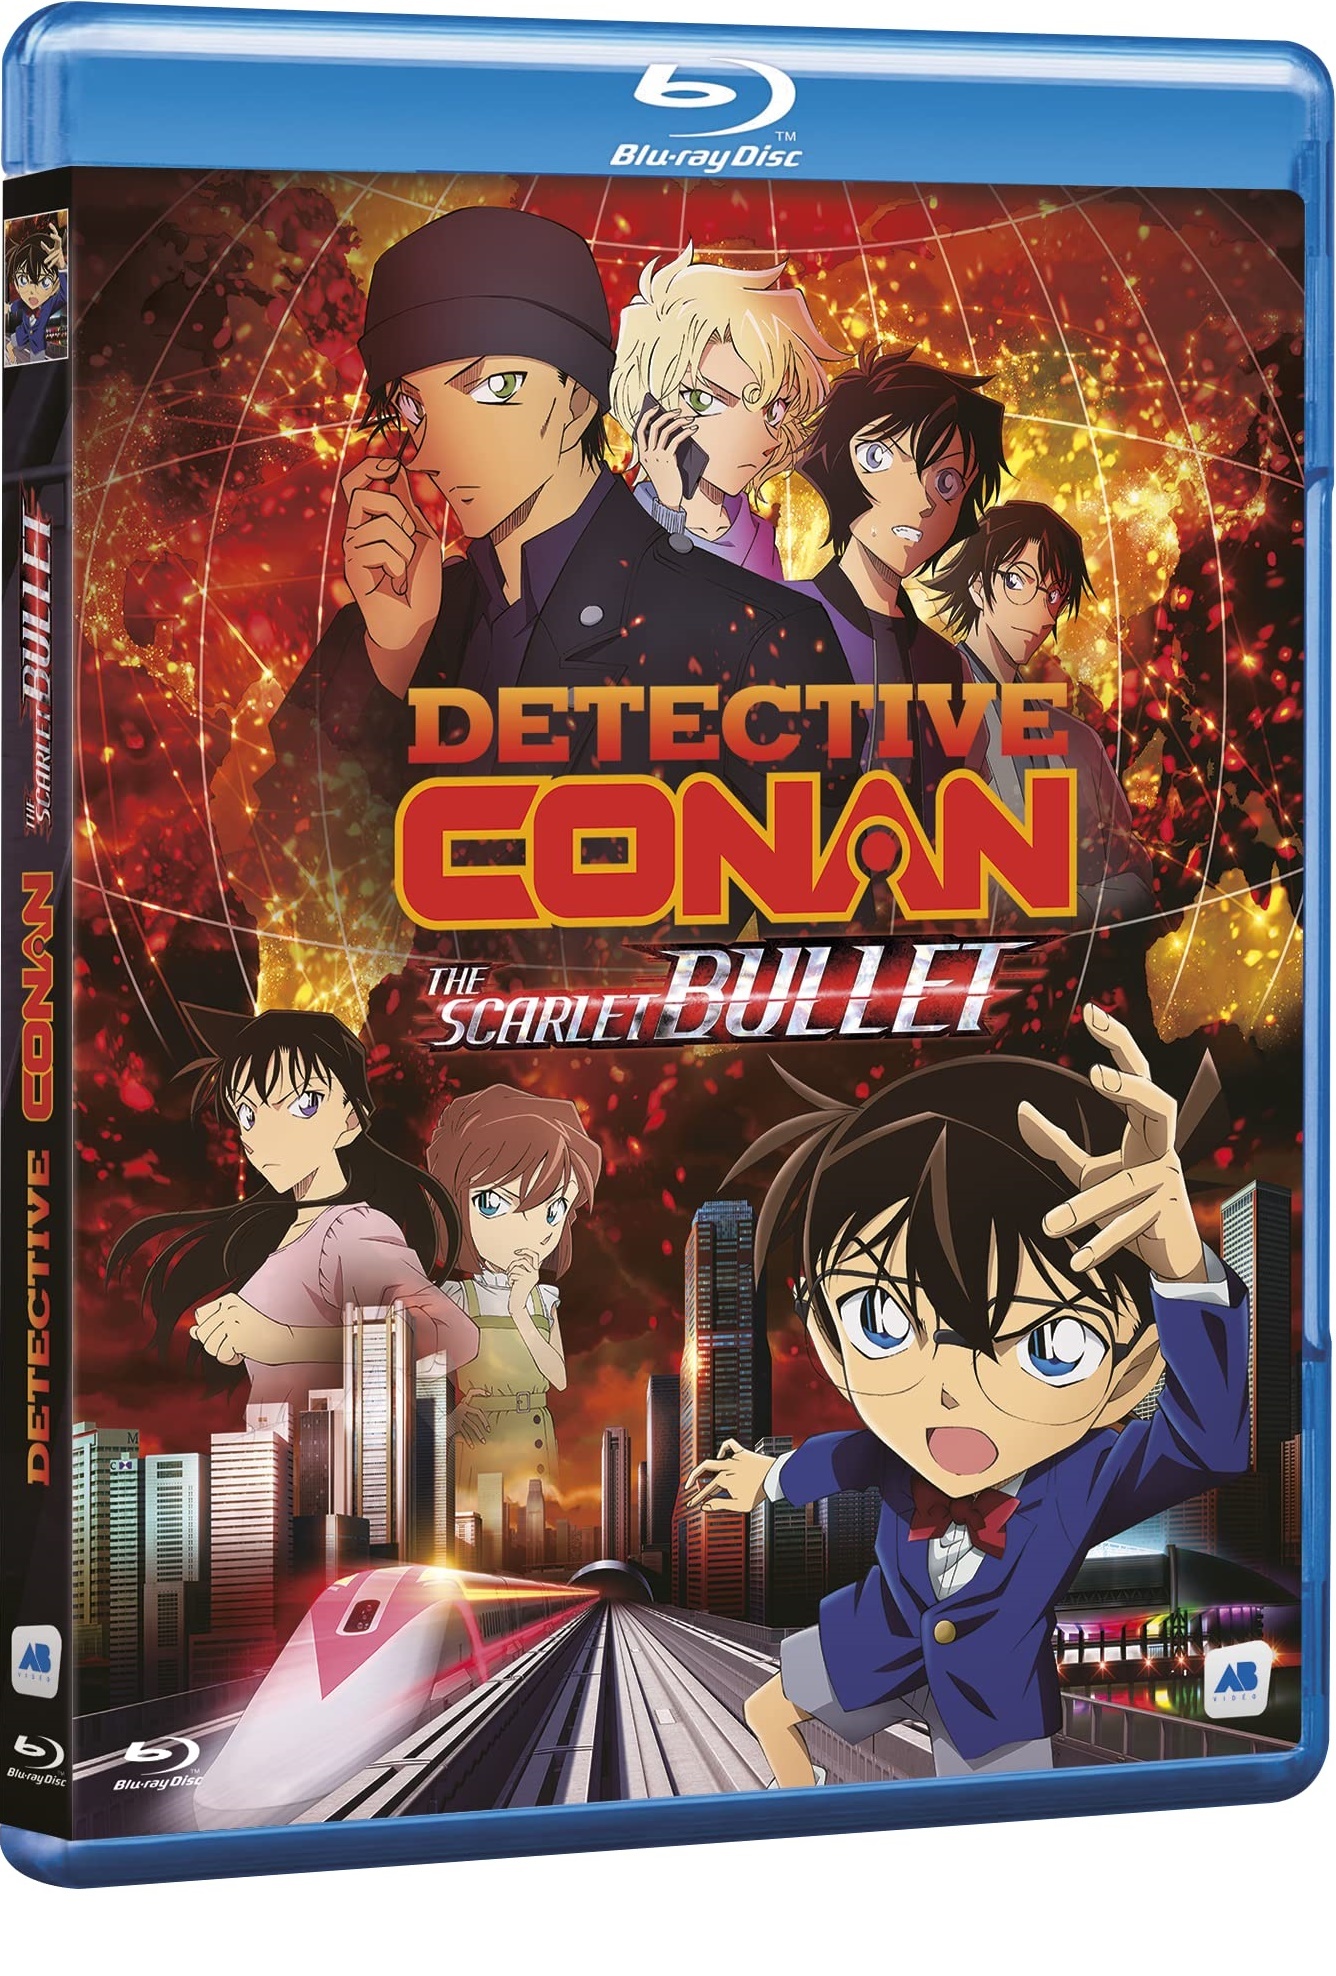 Detective Conan: The Scarlet Bullet Blu-ray (France)